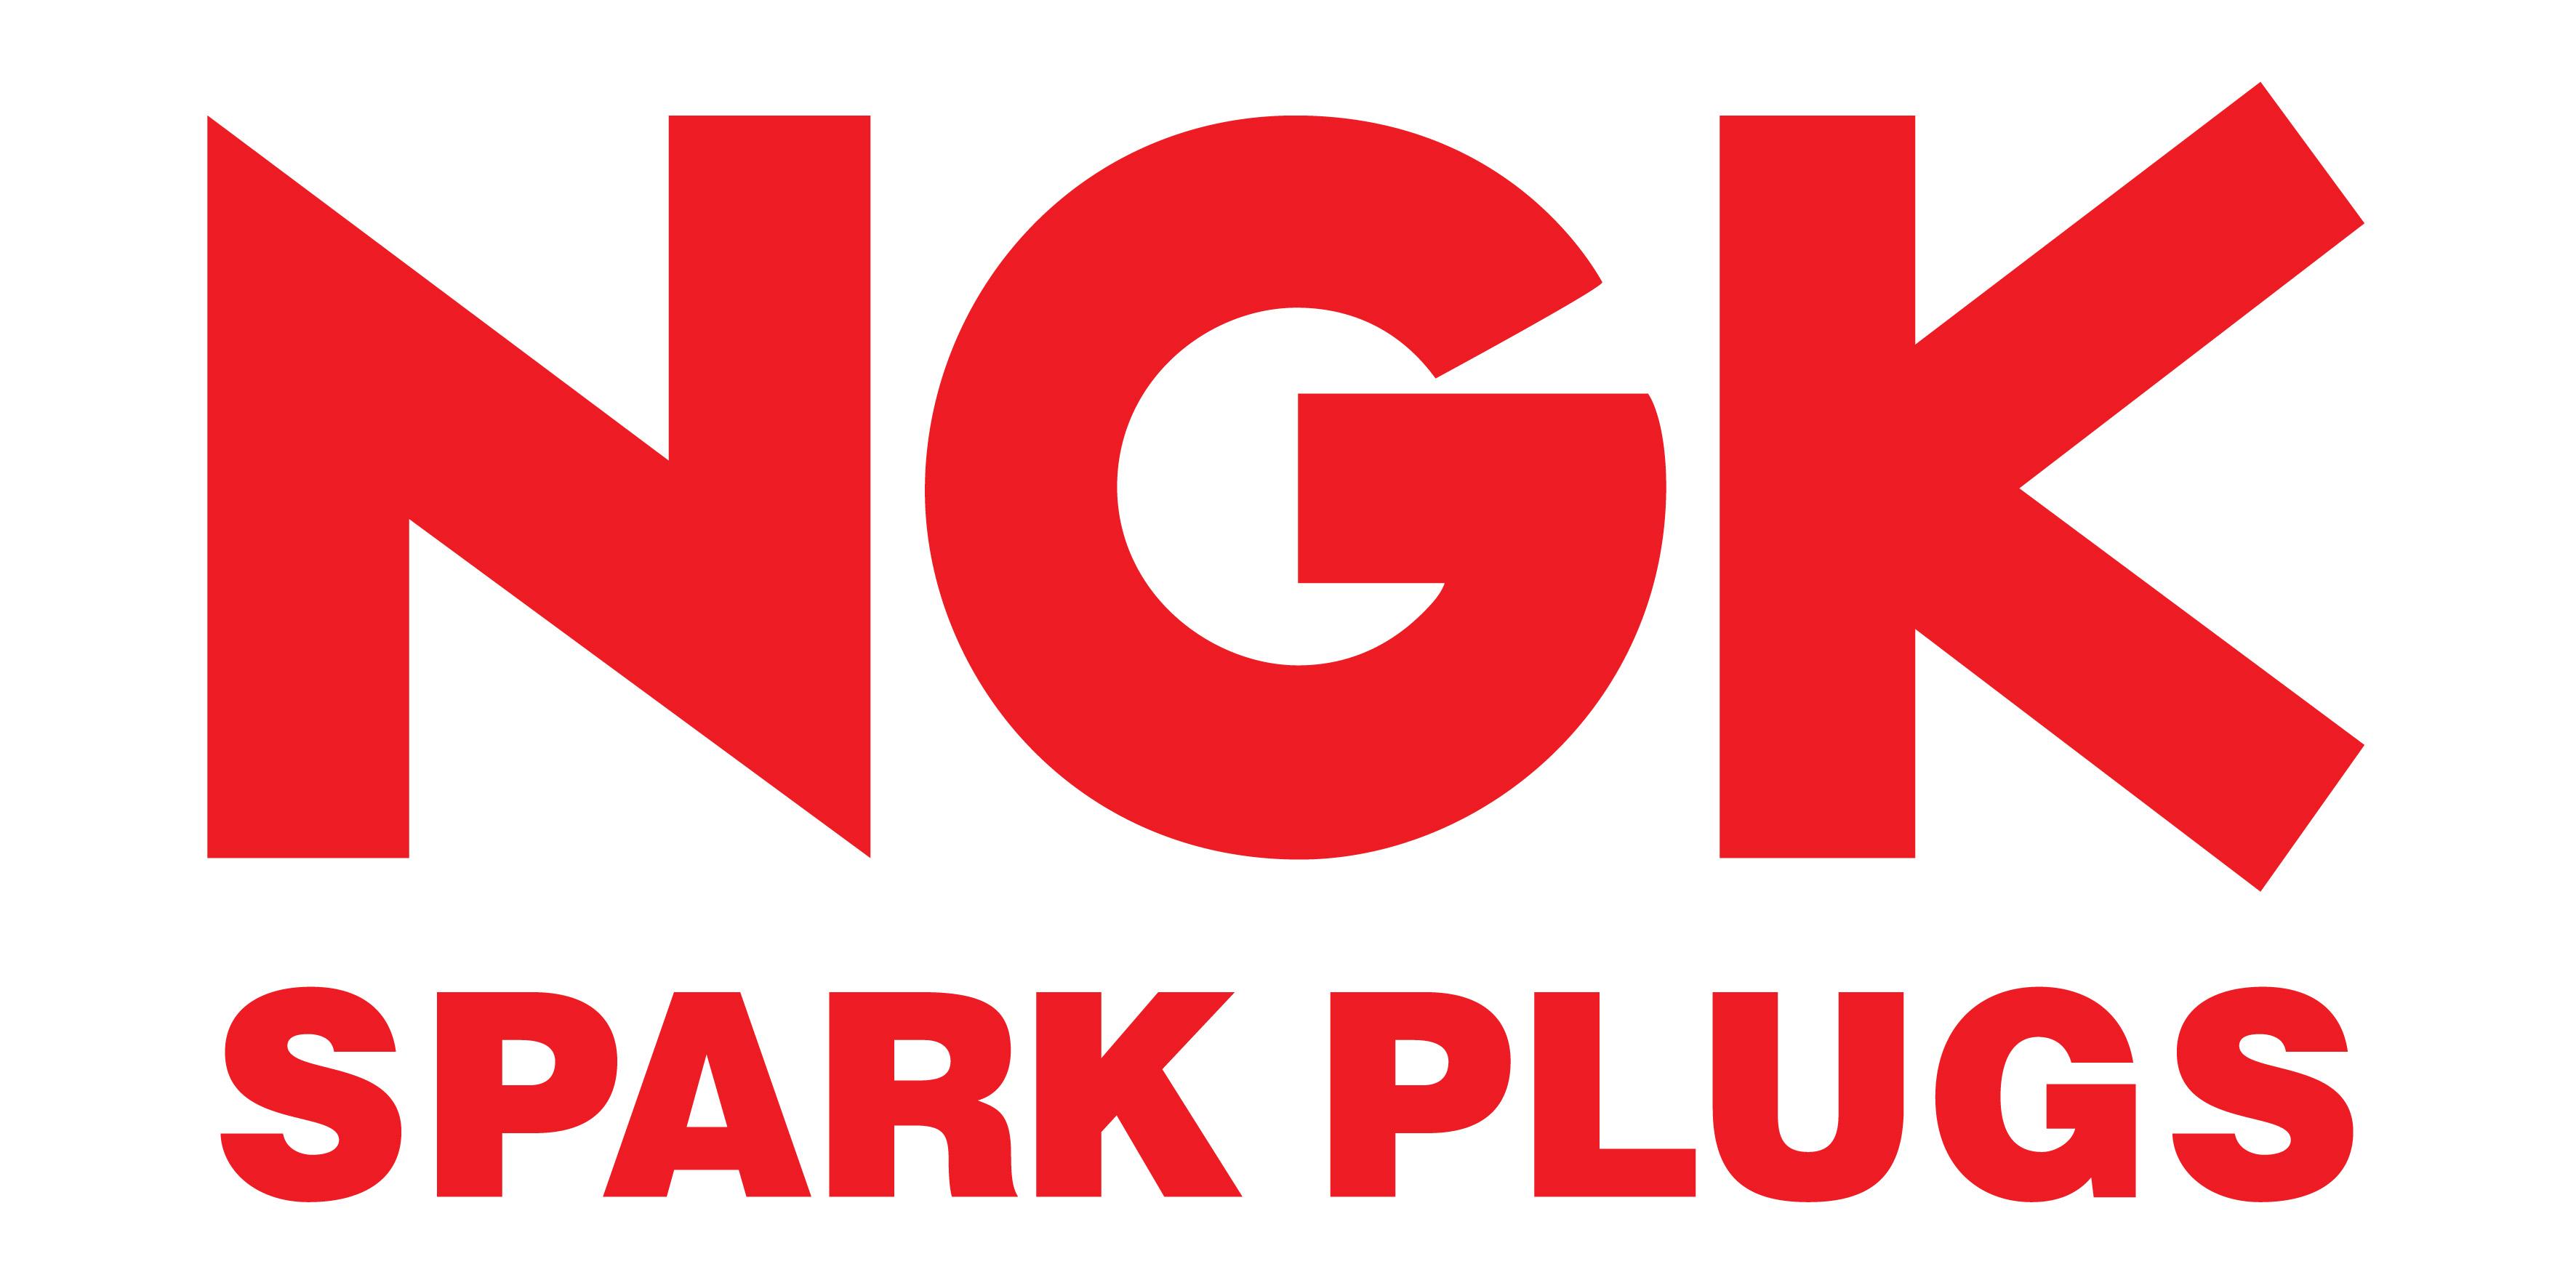 Nkg Logo - Charlie Martin - NGK Logo No.4-Red white background